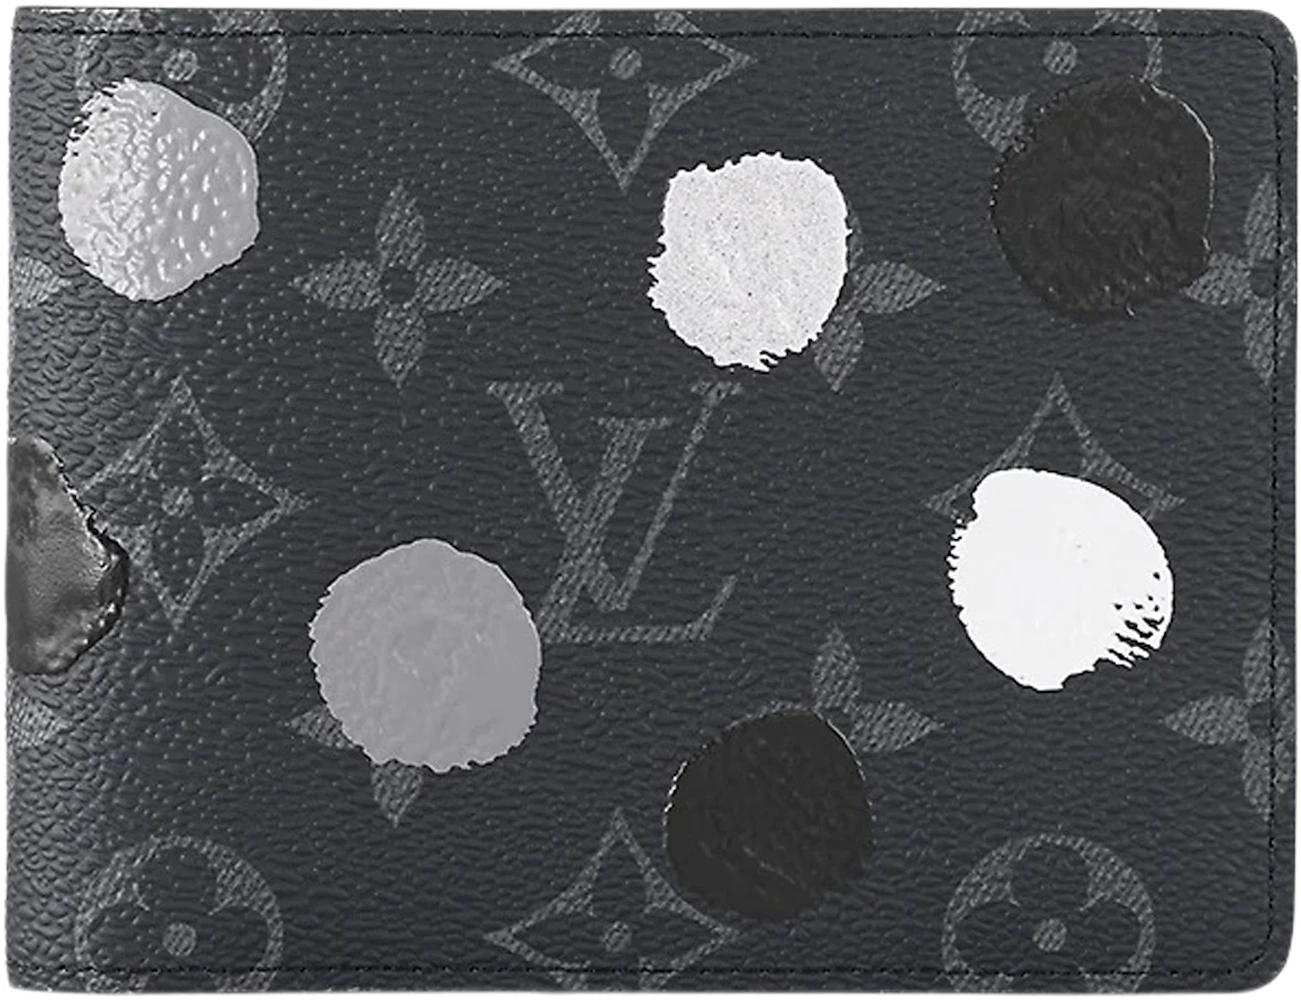 Yayoi Kusama x Louis Vuitton: When color pops!